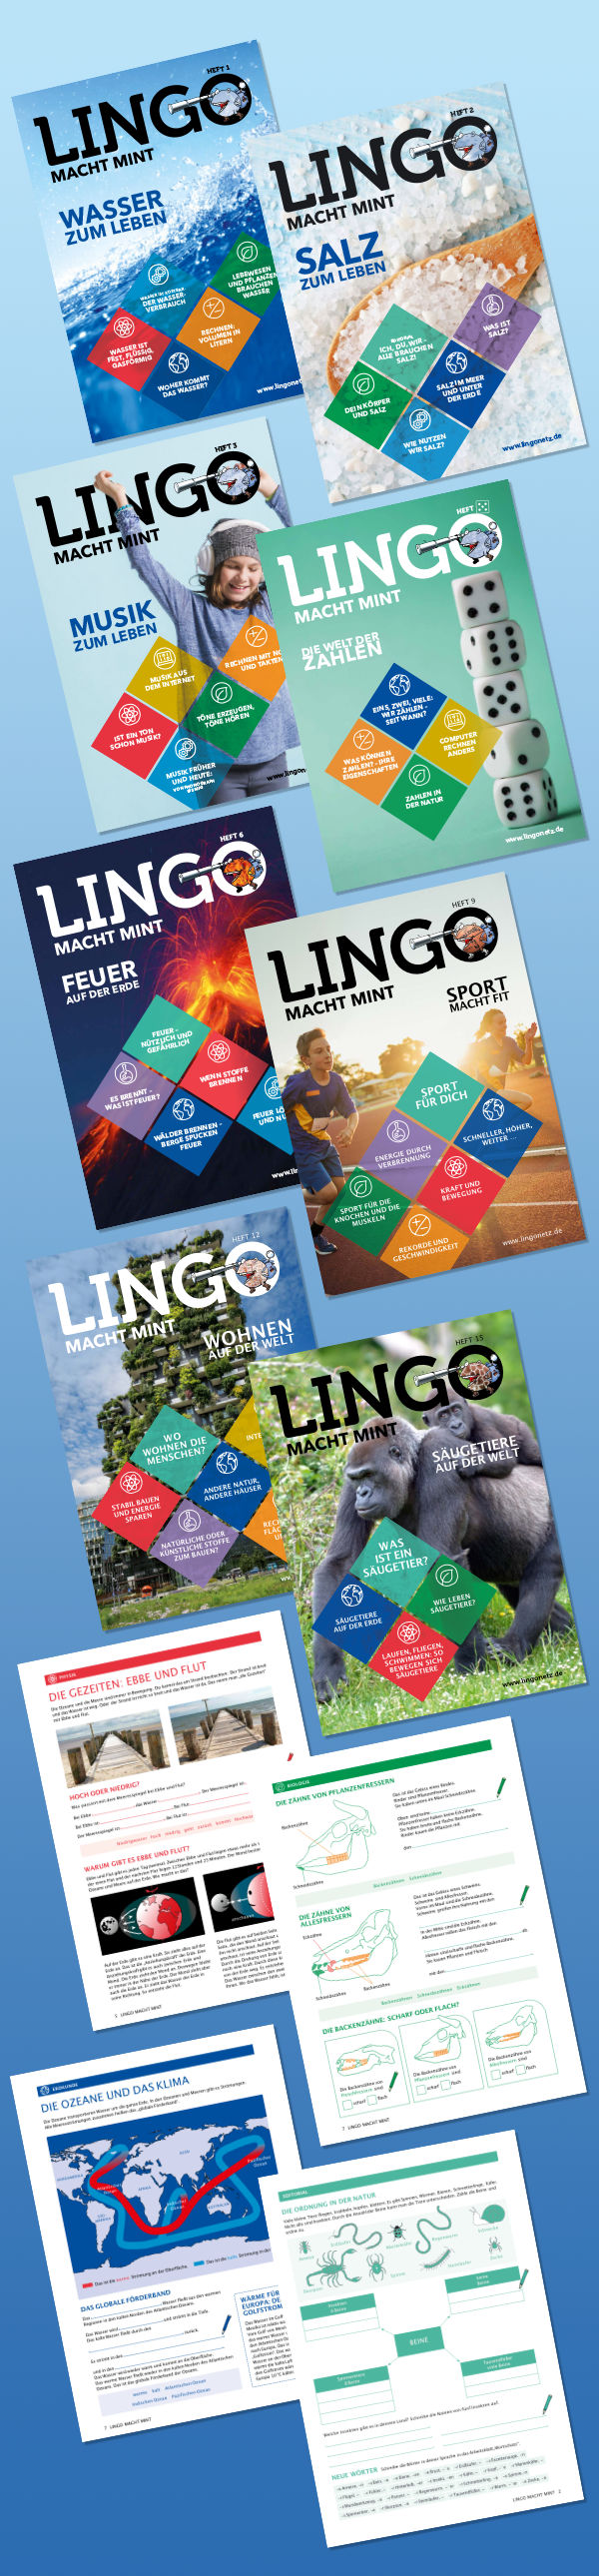 Lingo macht MINT – Kindermagazin